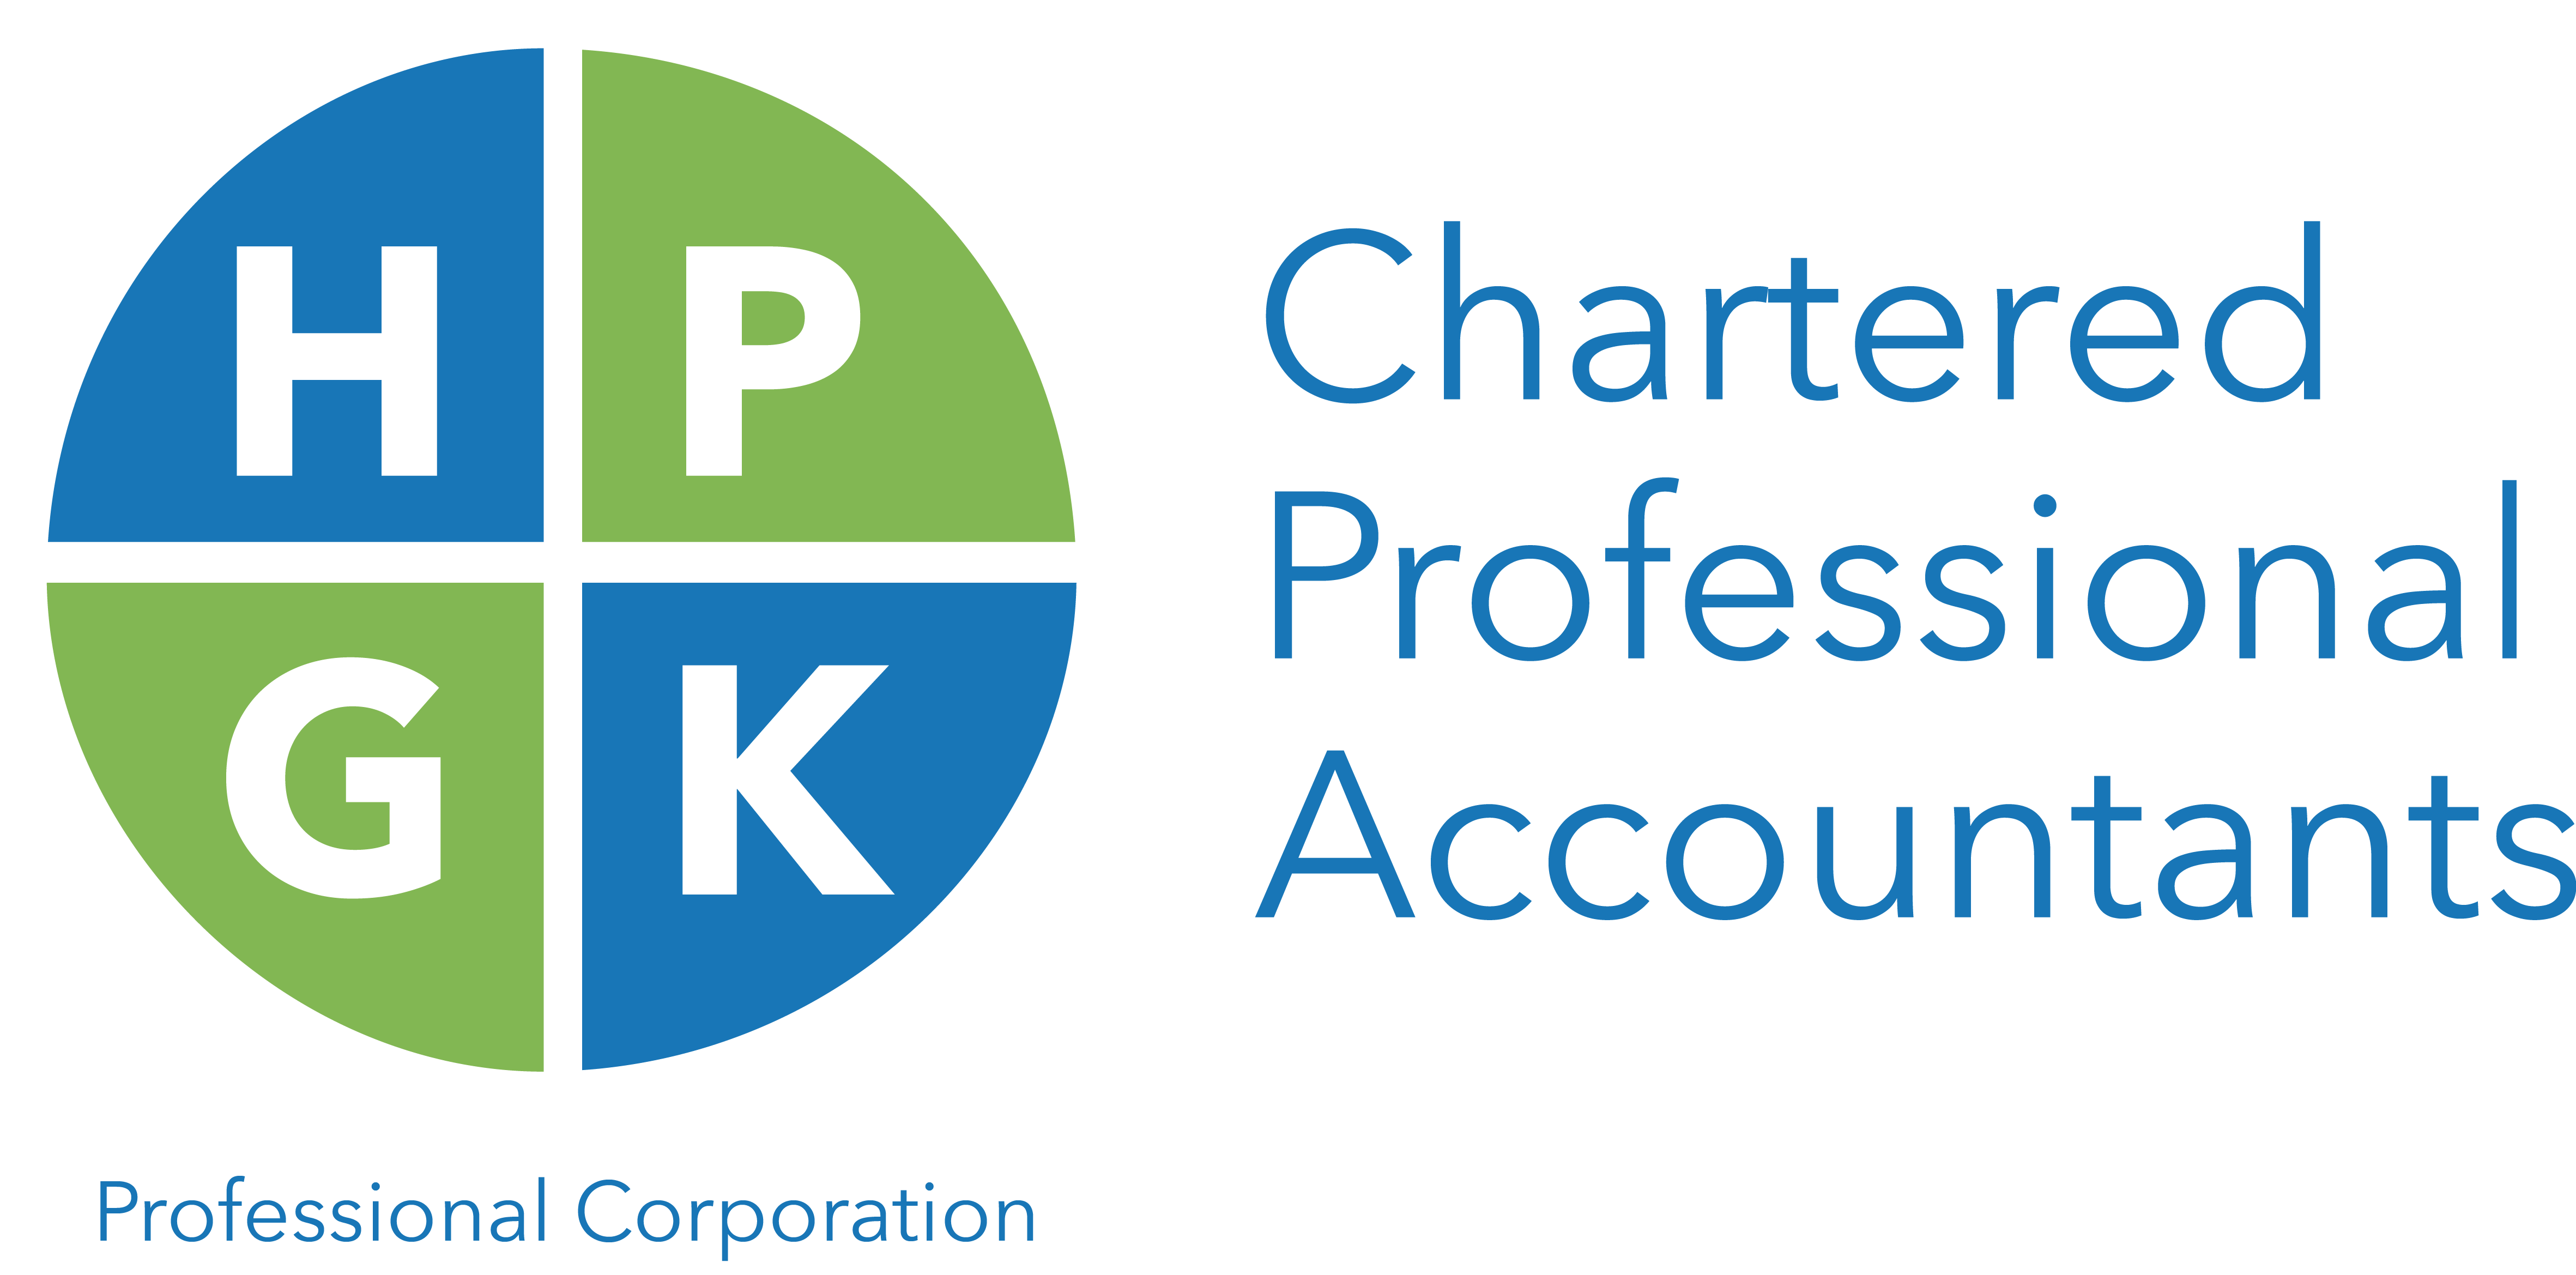 HPGK Professional Corporation Chartered Professional Accountants